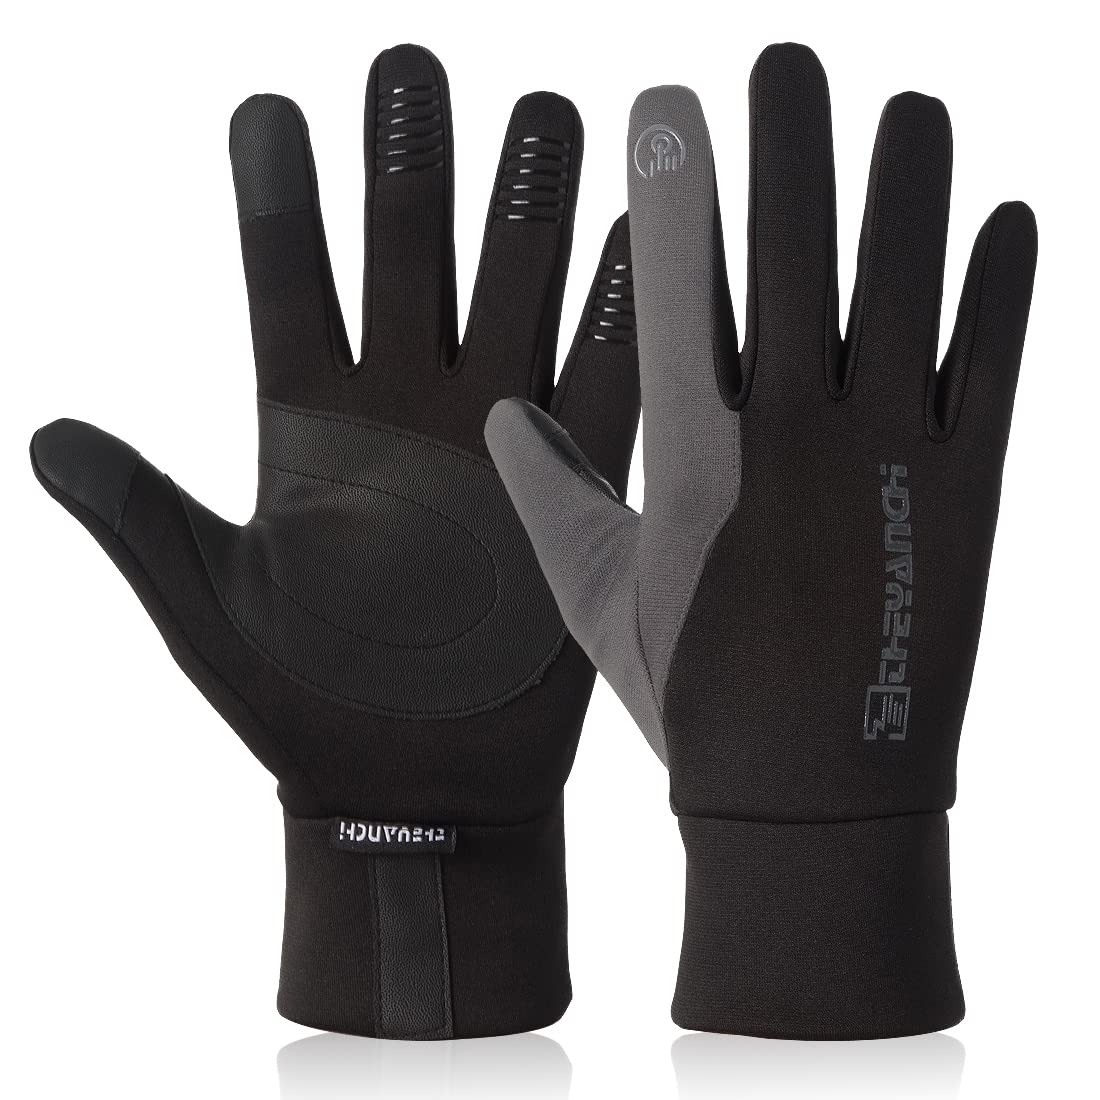 Yiding Unisex Touch Screen Outdoor Thermal Gloves Winter Warm Waterproof Full Finger Velvet Lining Skiing Gloves 